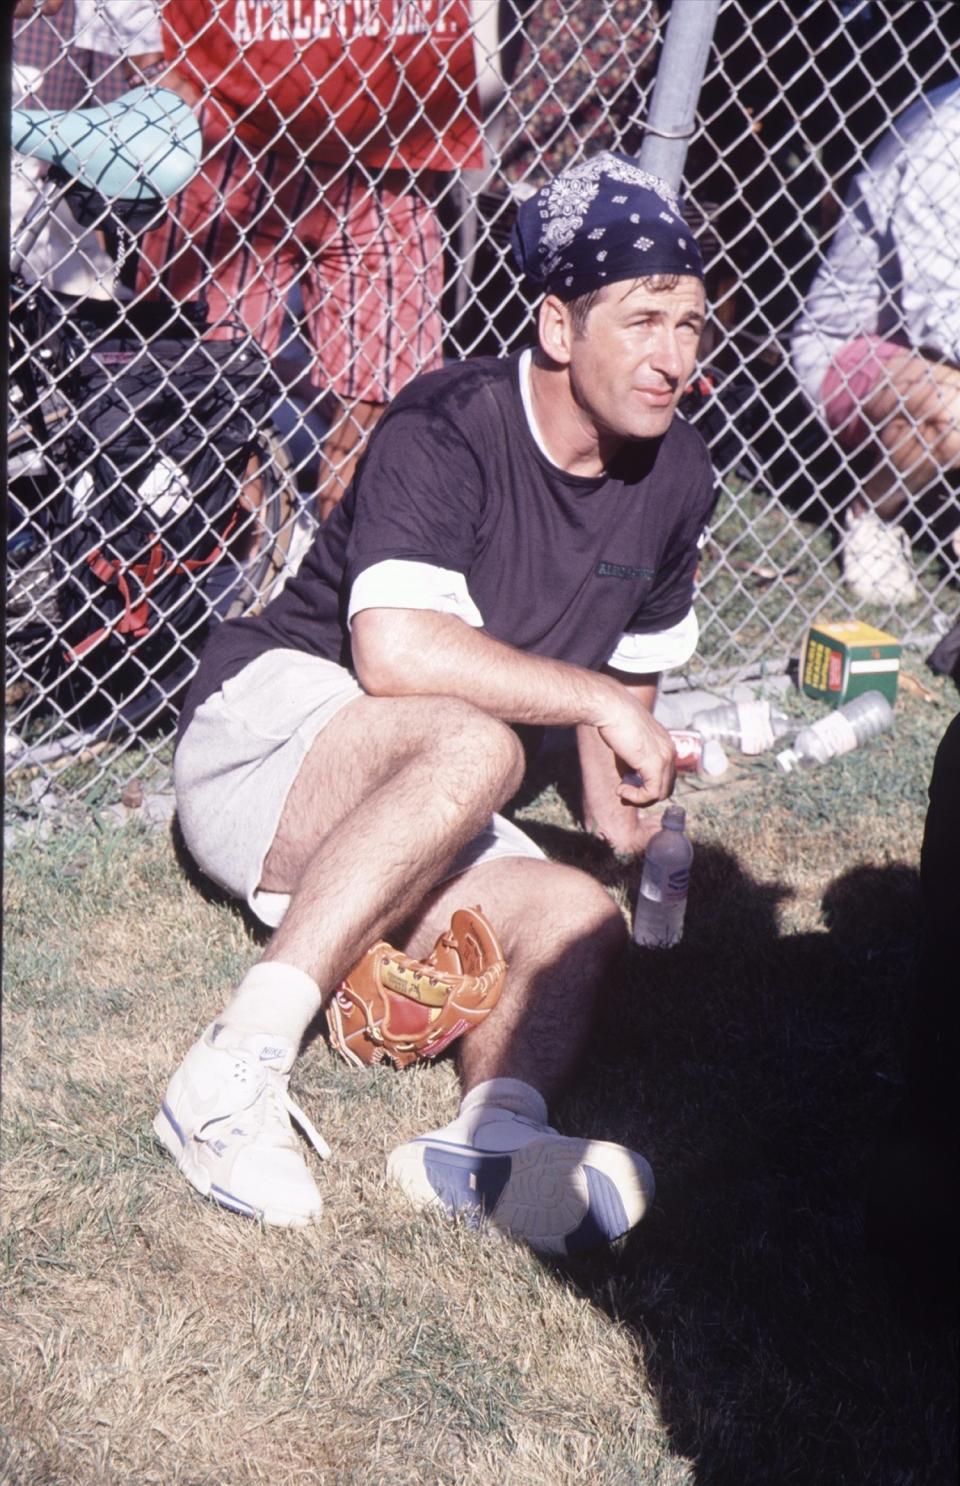 Baldwin at a baseball game, circa 1992.